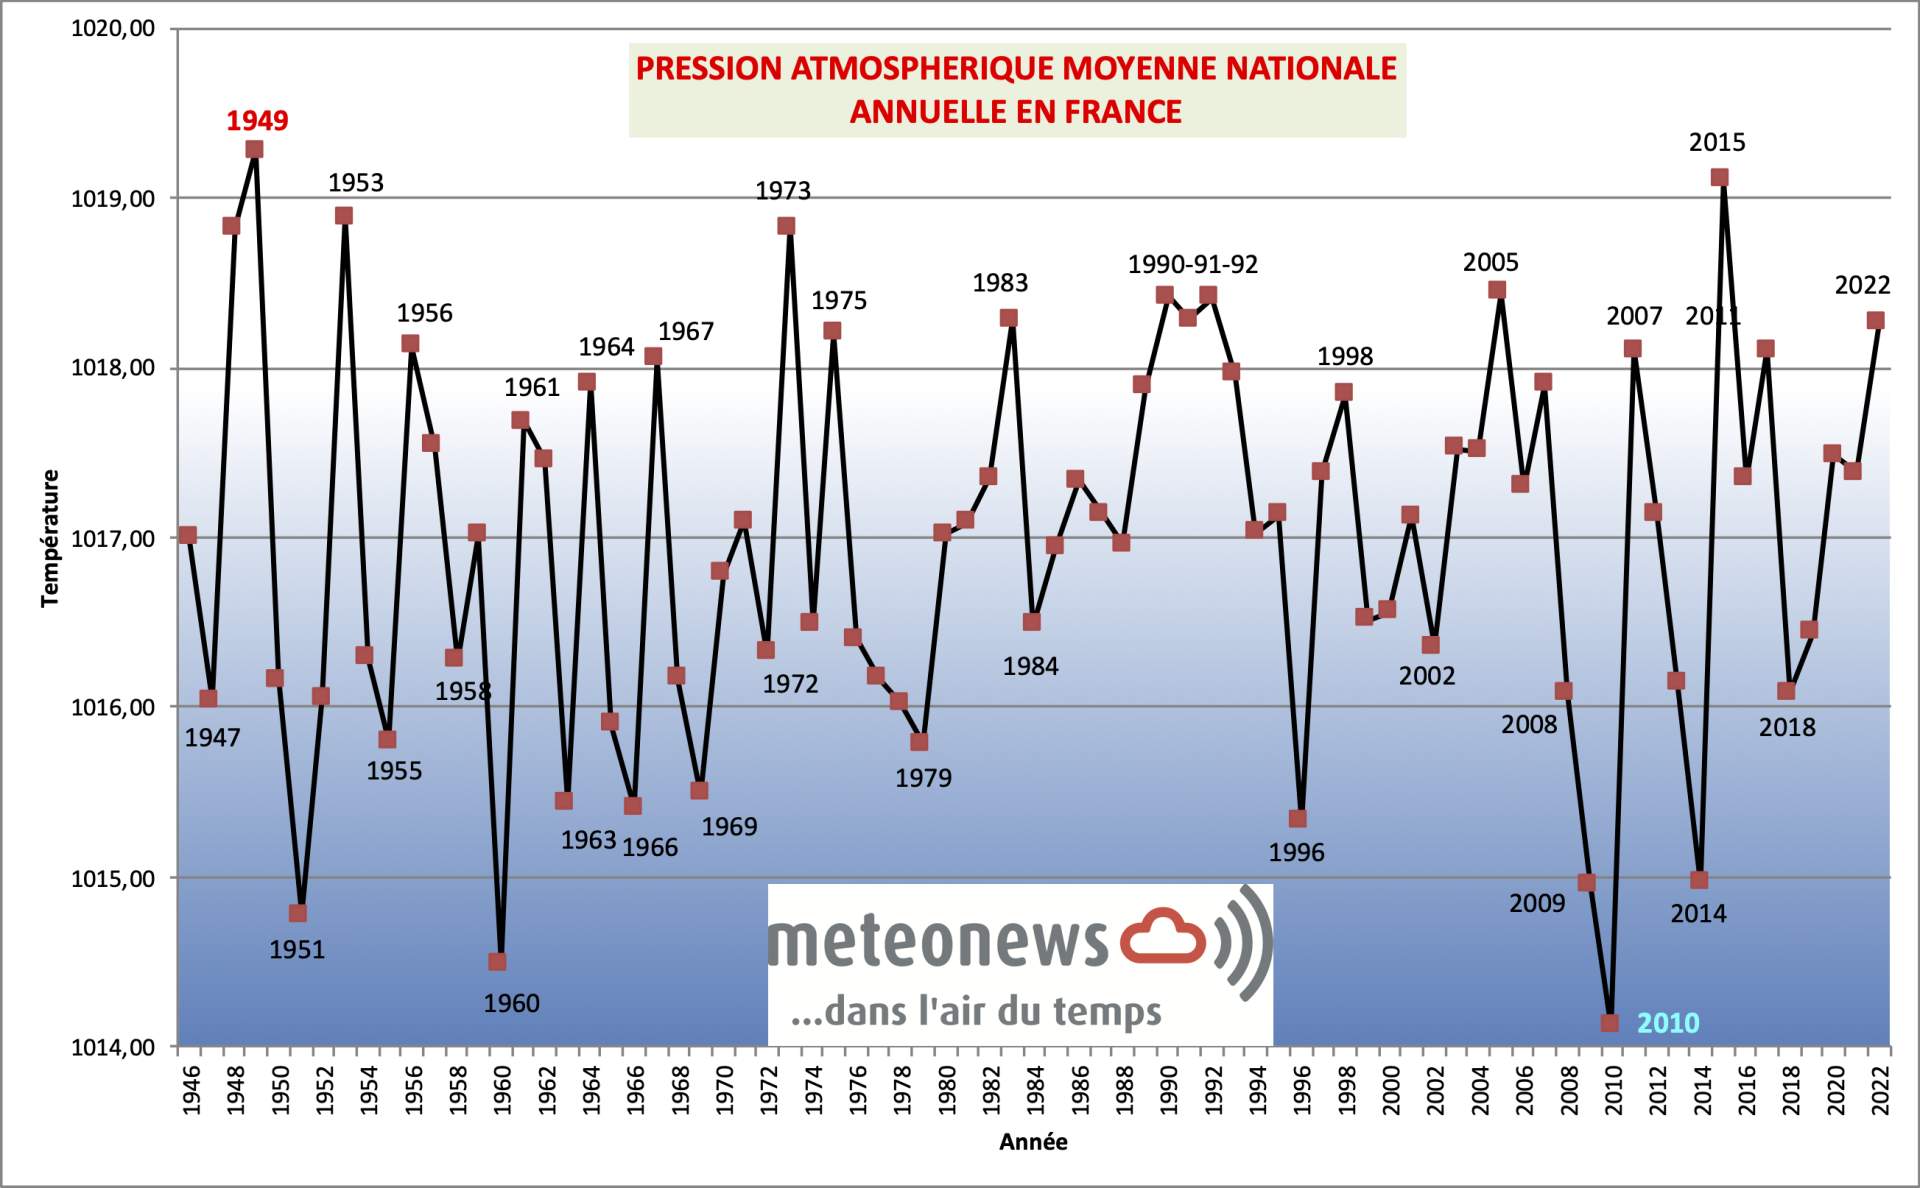 Pression atmosphérique moyenne nationale annuelle en France; Source: MeteoNews